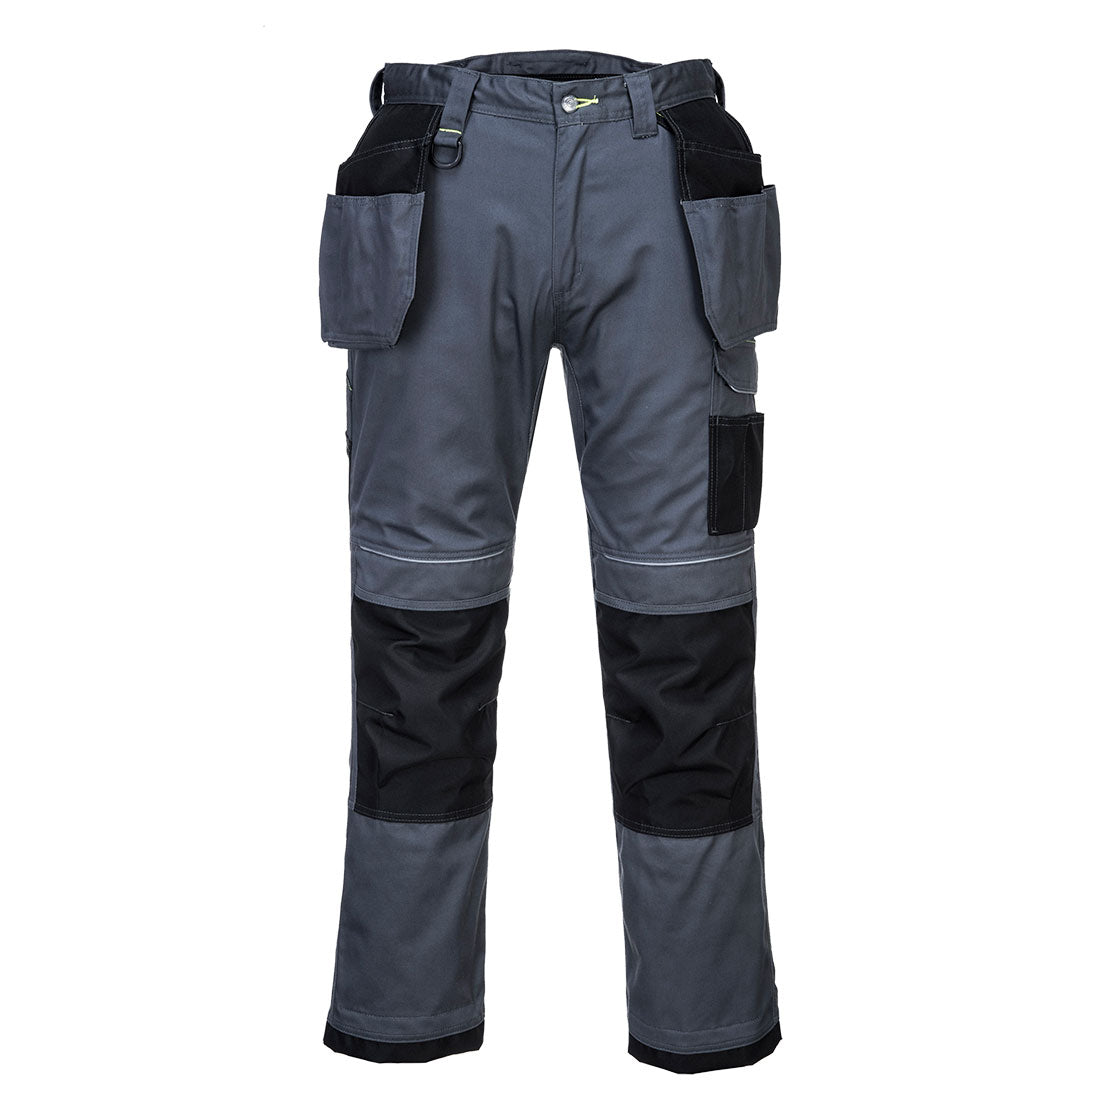 Portwest T602 - Grey/Black  48 Regular PW3 Holster Work Trousers Combat Cargo Pants